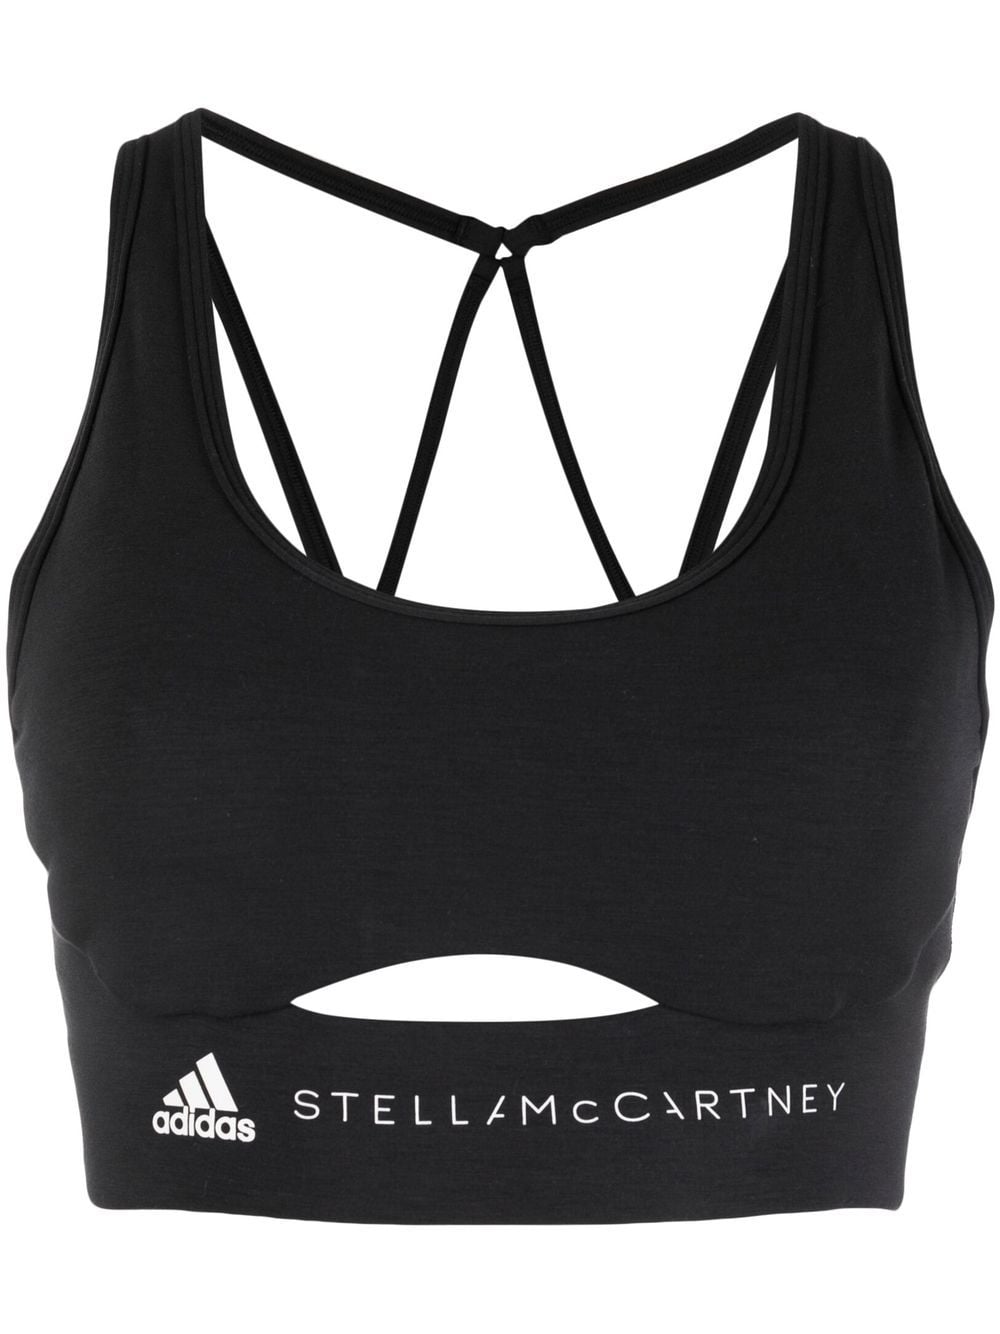 adidas by Stella McCartney logo-print bralette top - Black